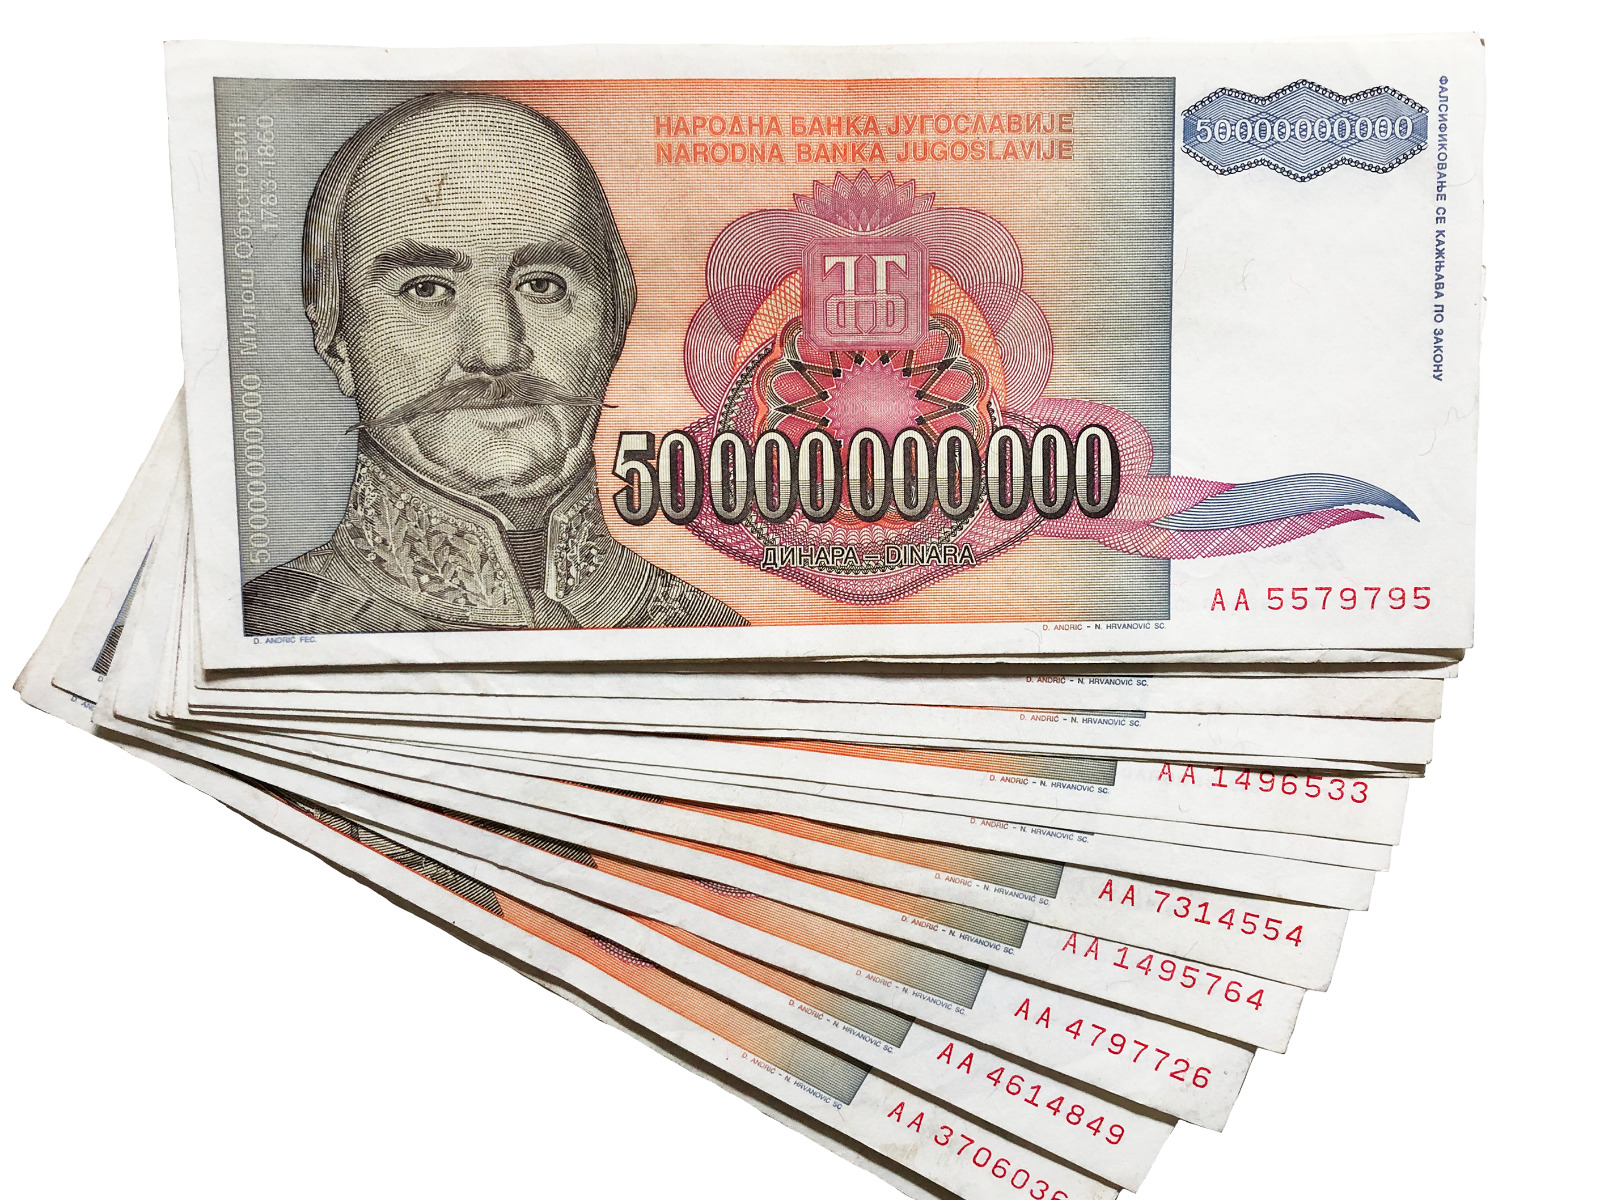 Yugoslavia 50 Billion Dinara 1993 Circulated Banknote Currency Hyperinflation